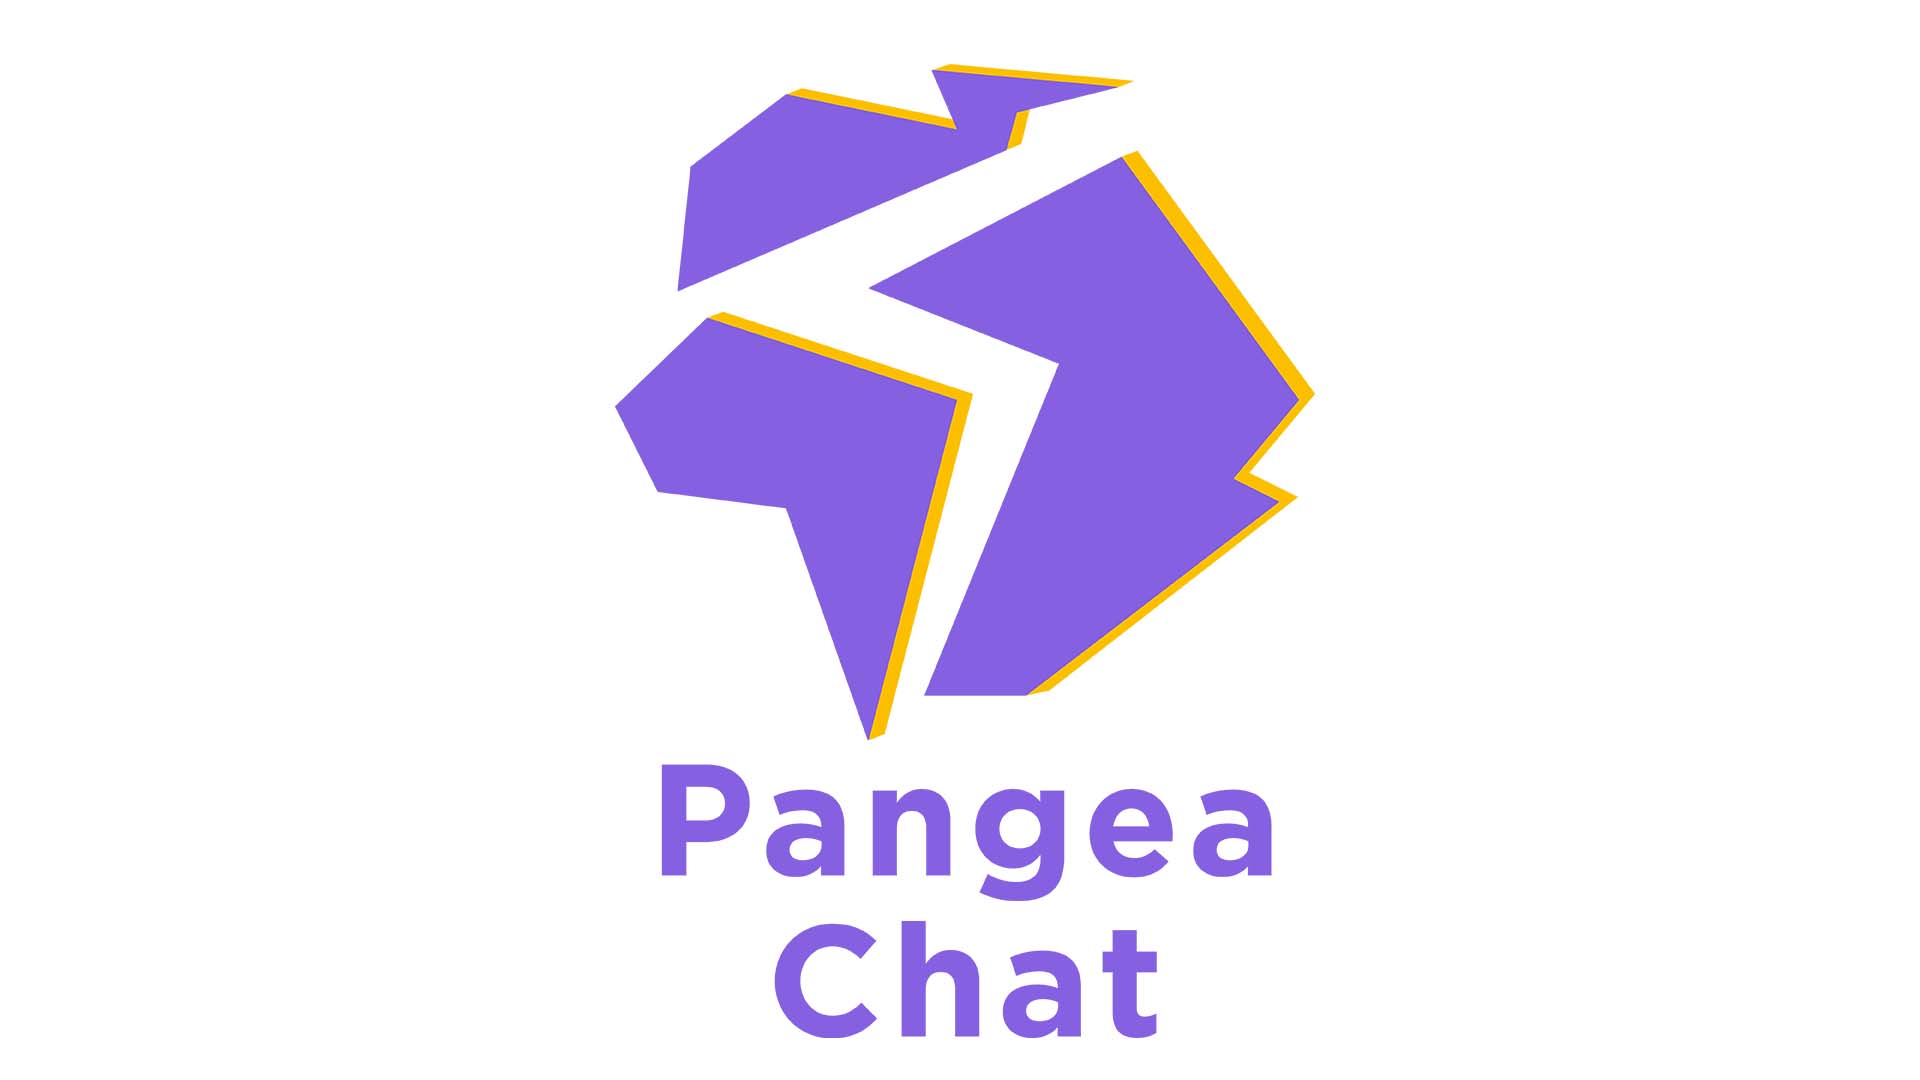 pangea chat logo<br />
